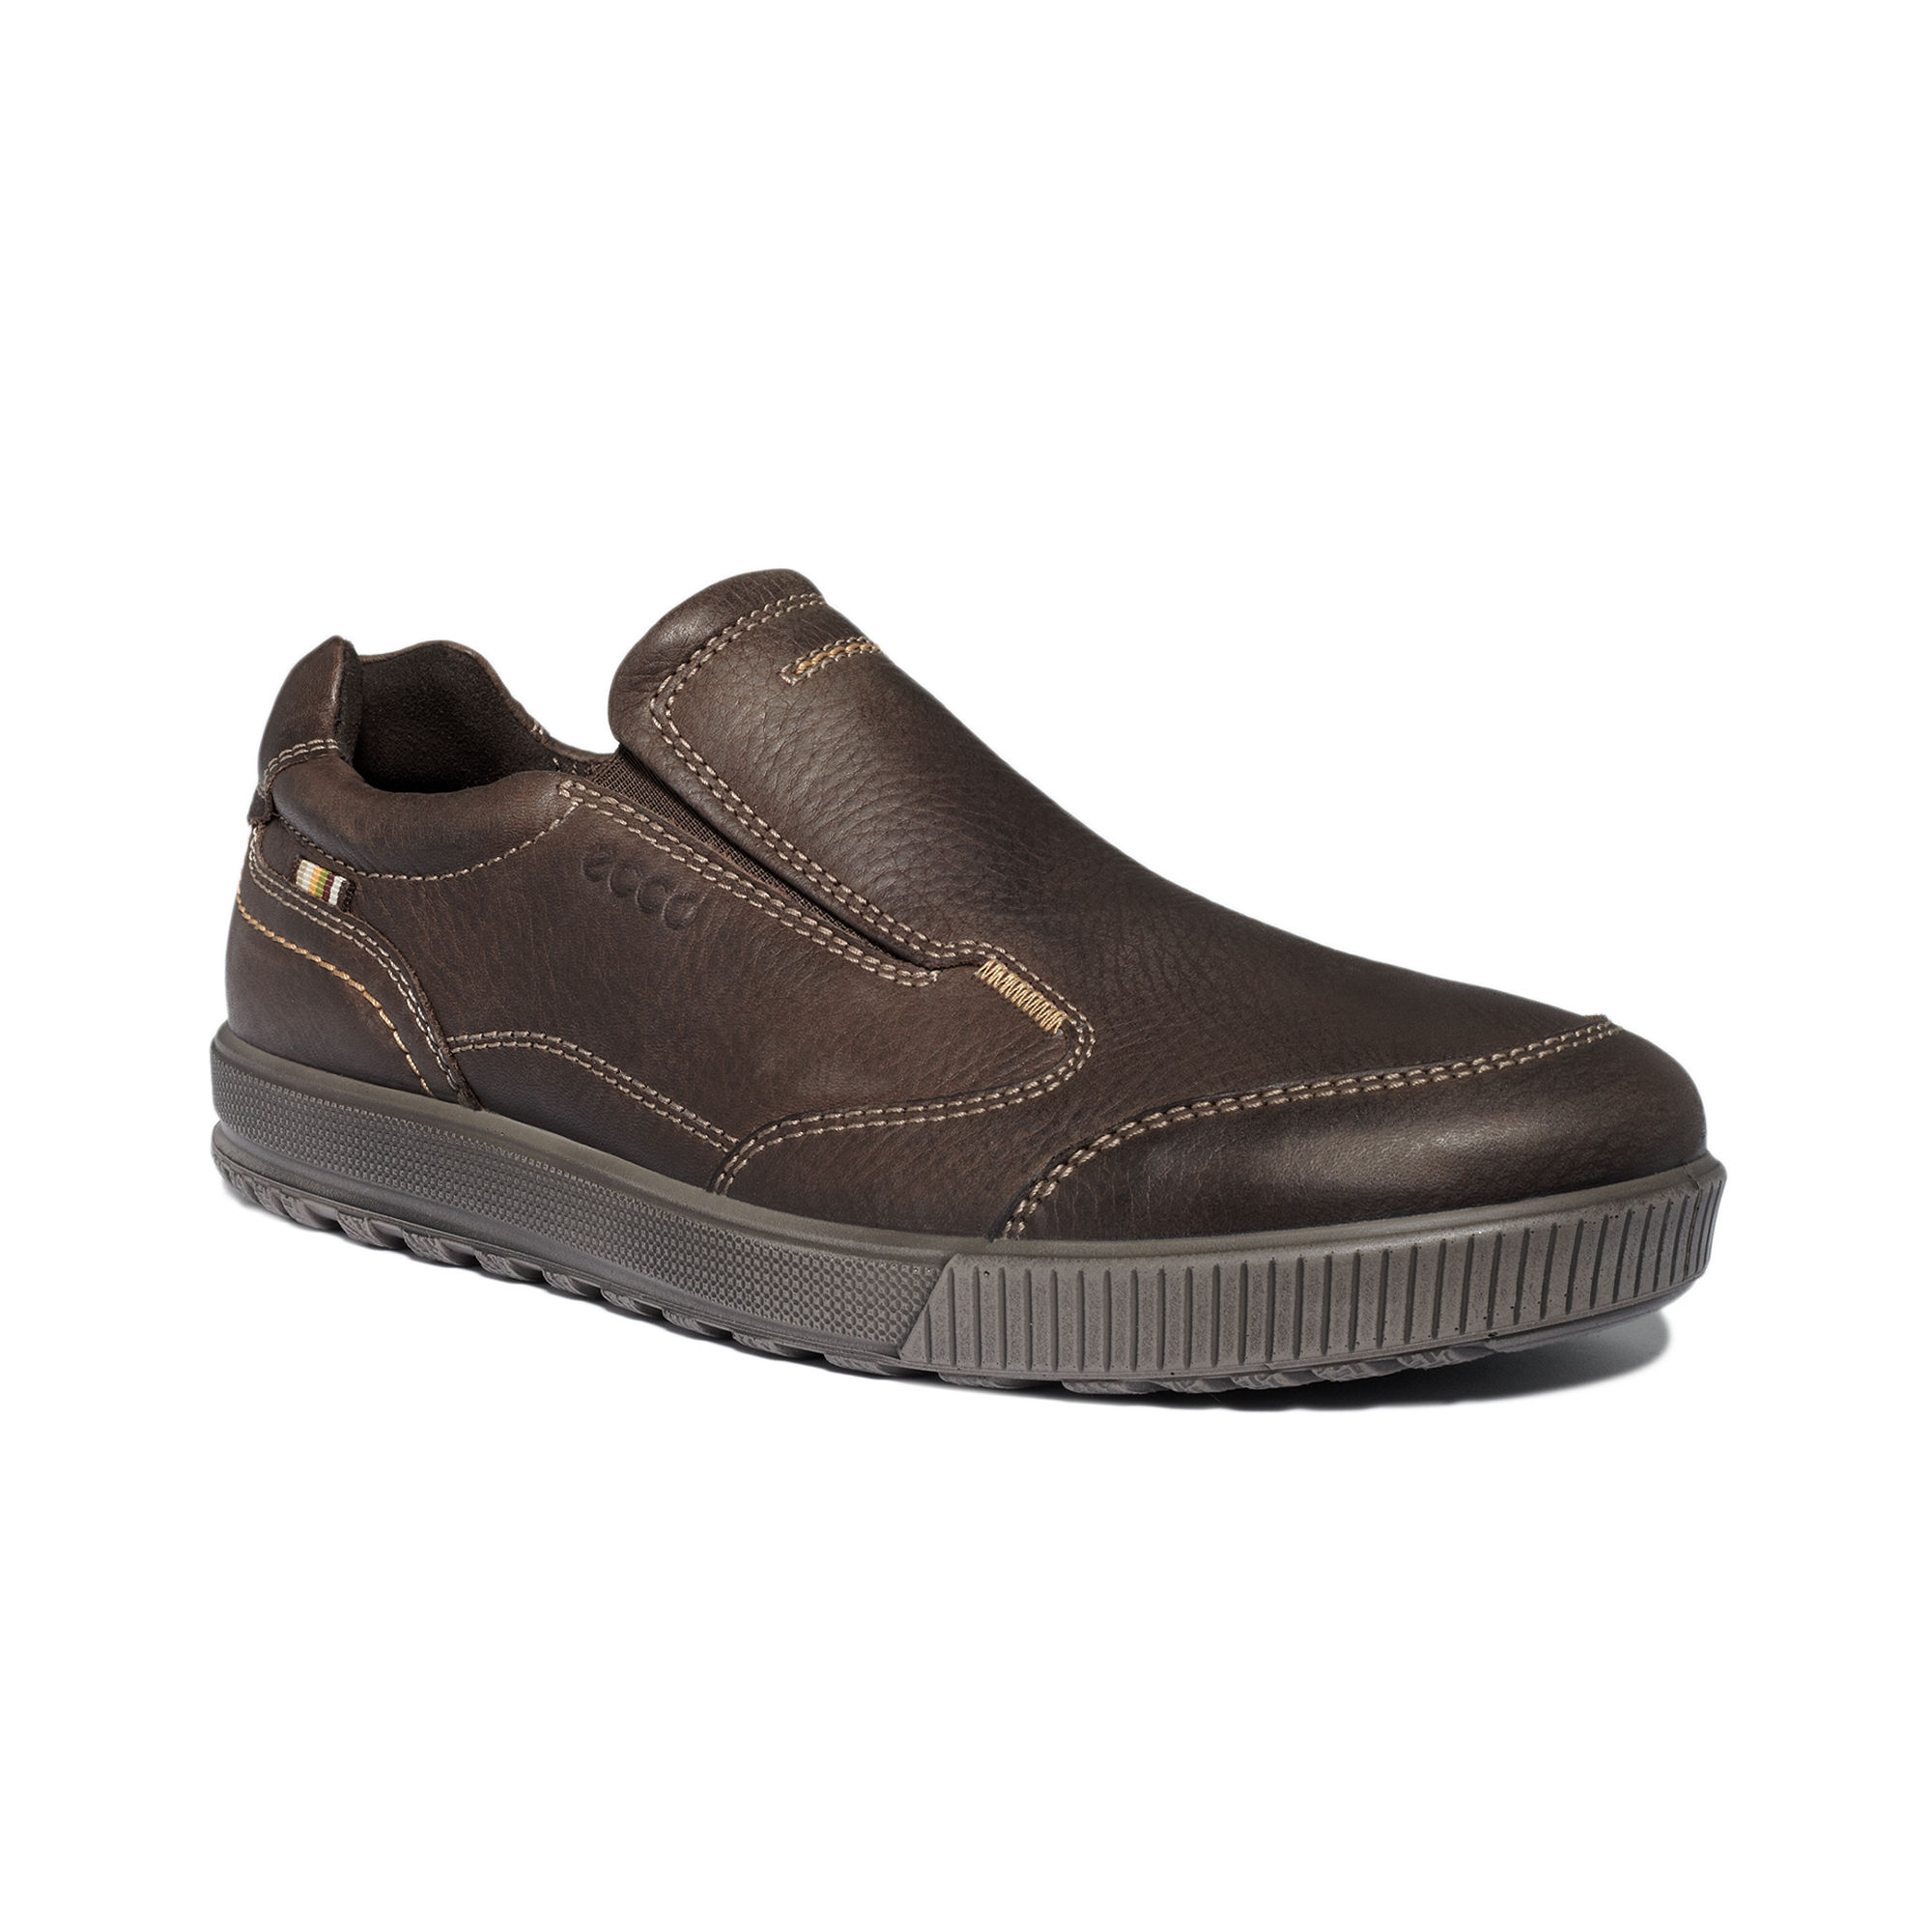 Lyst - Ecco Bradley Slip On Shoes in Brown for Men